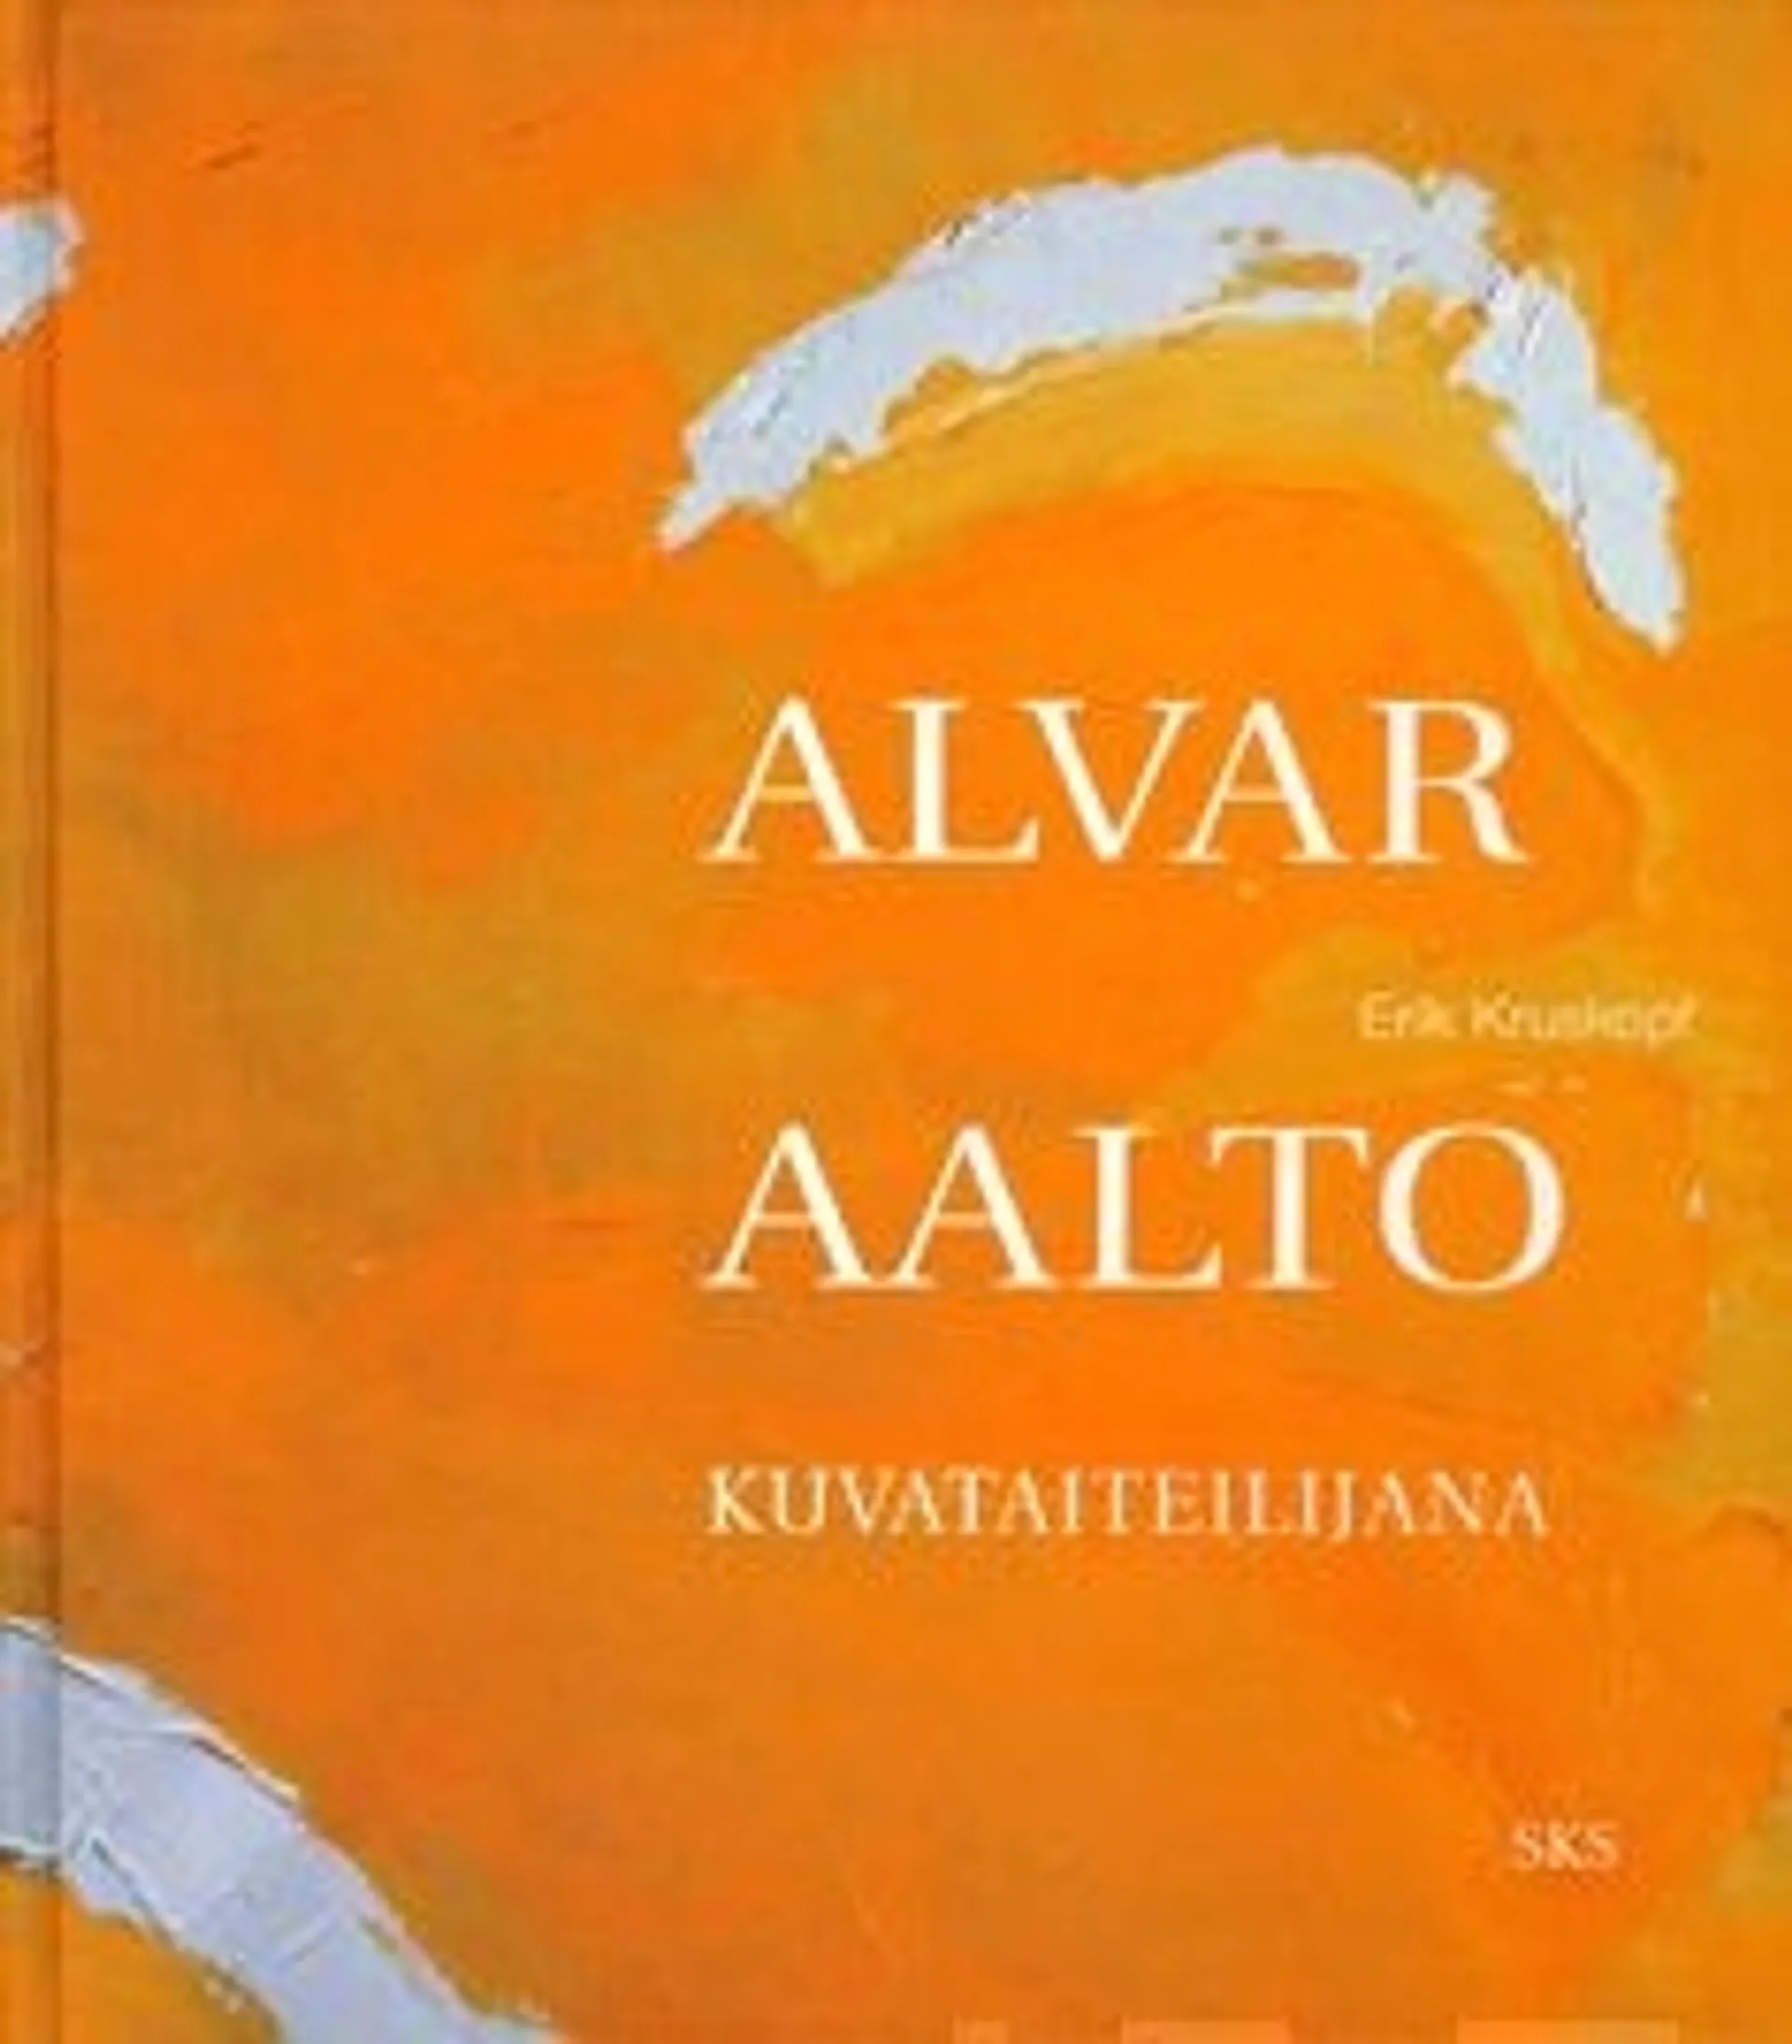 Kruskopf, Alvar Aalto kuvataiteilijana